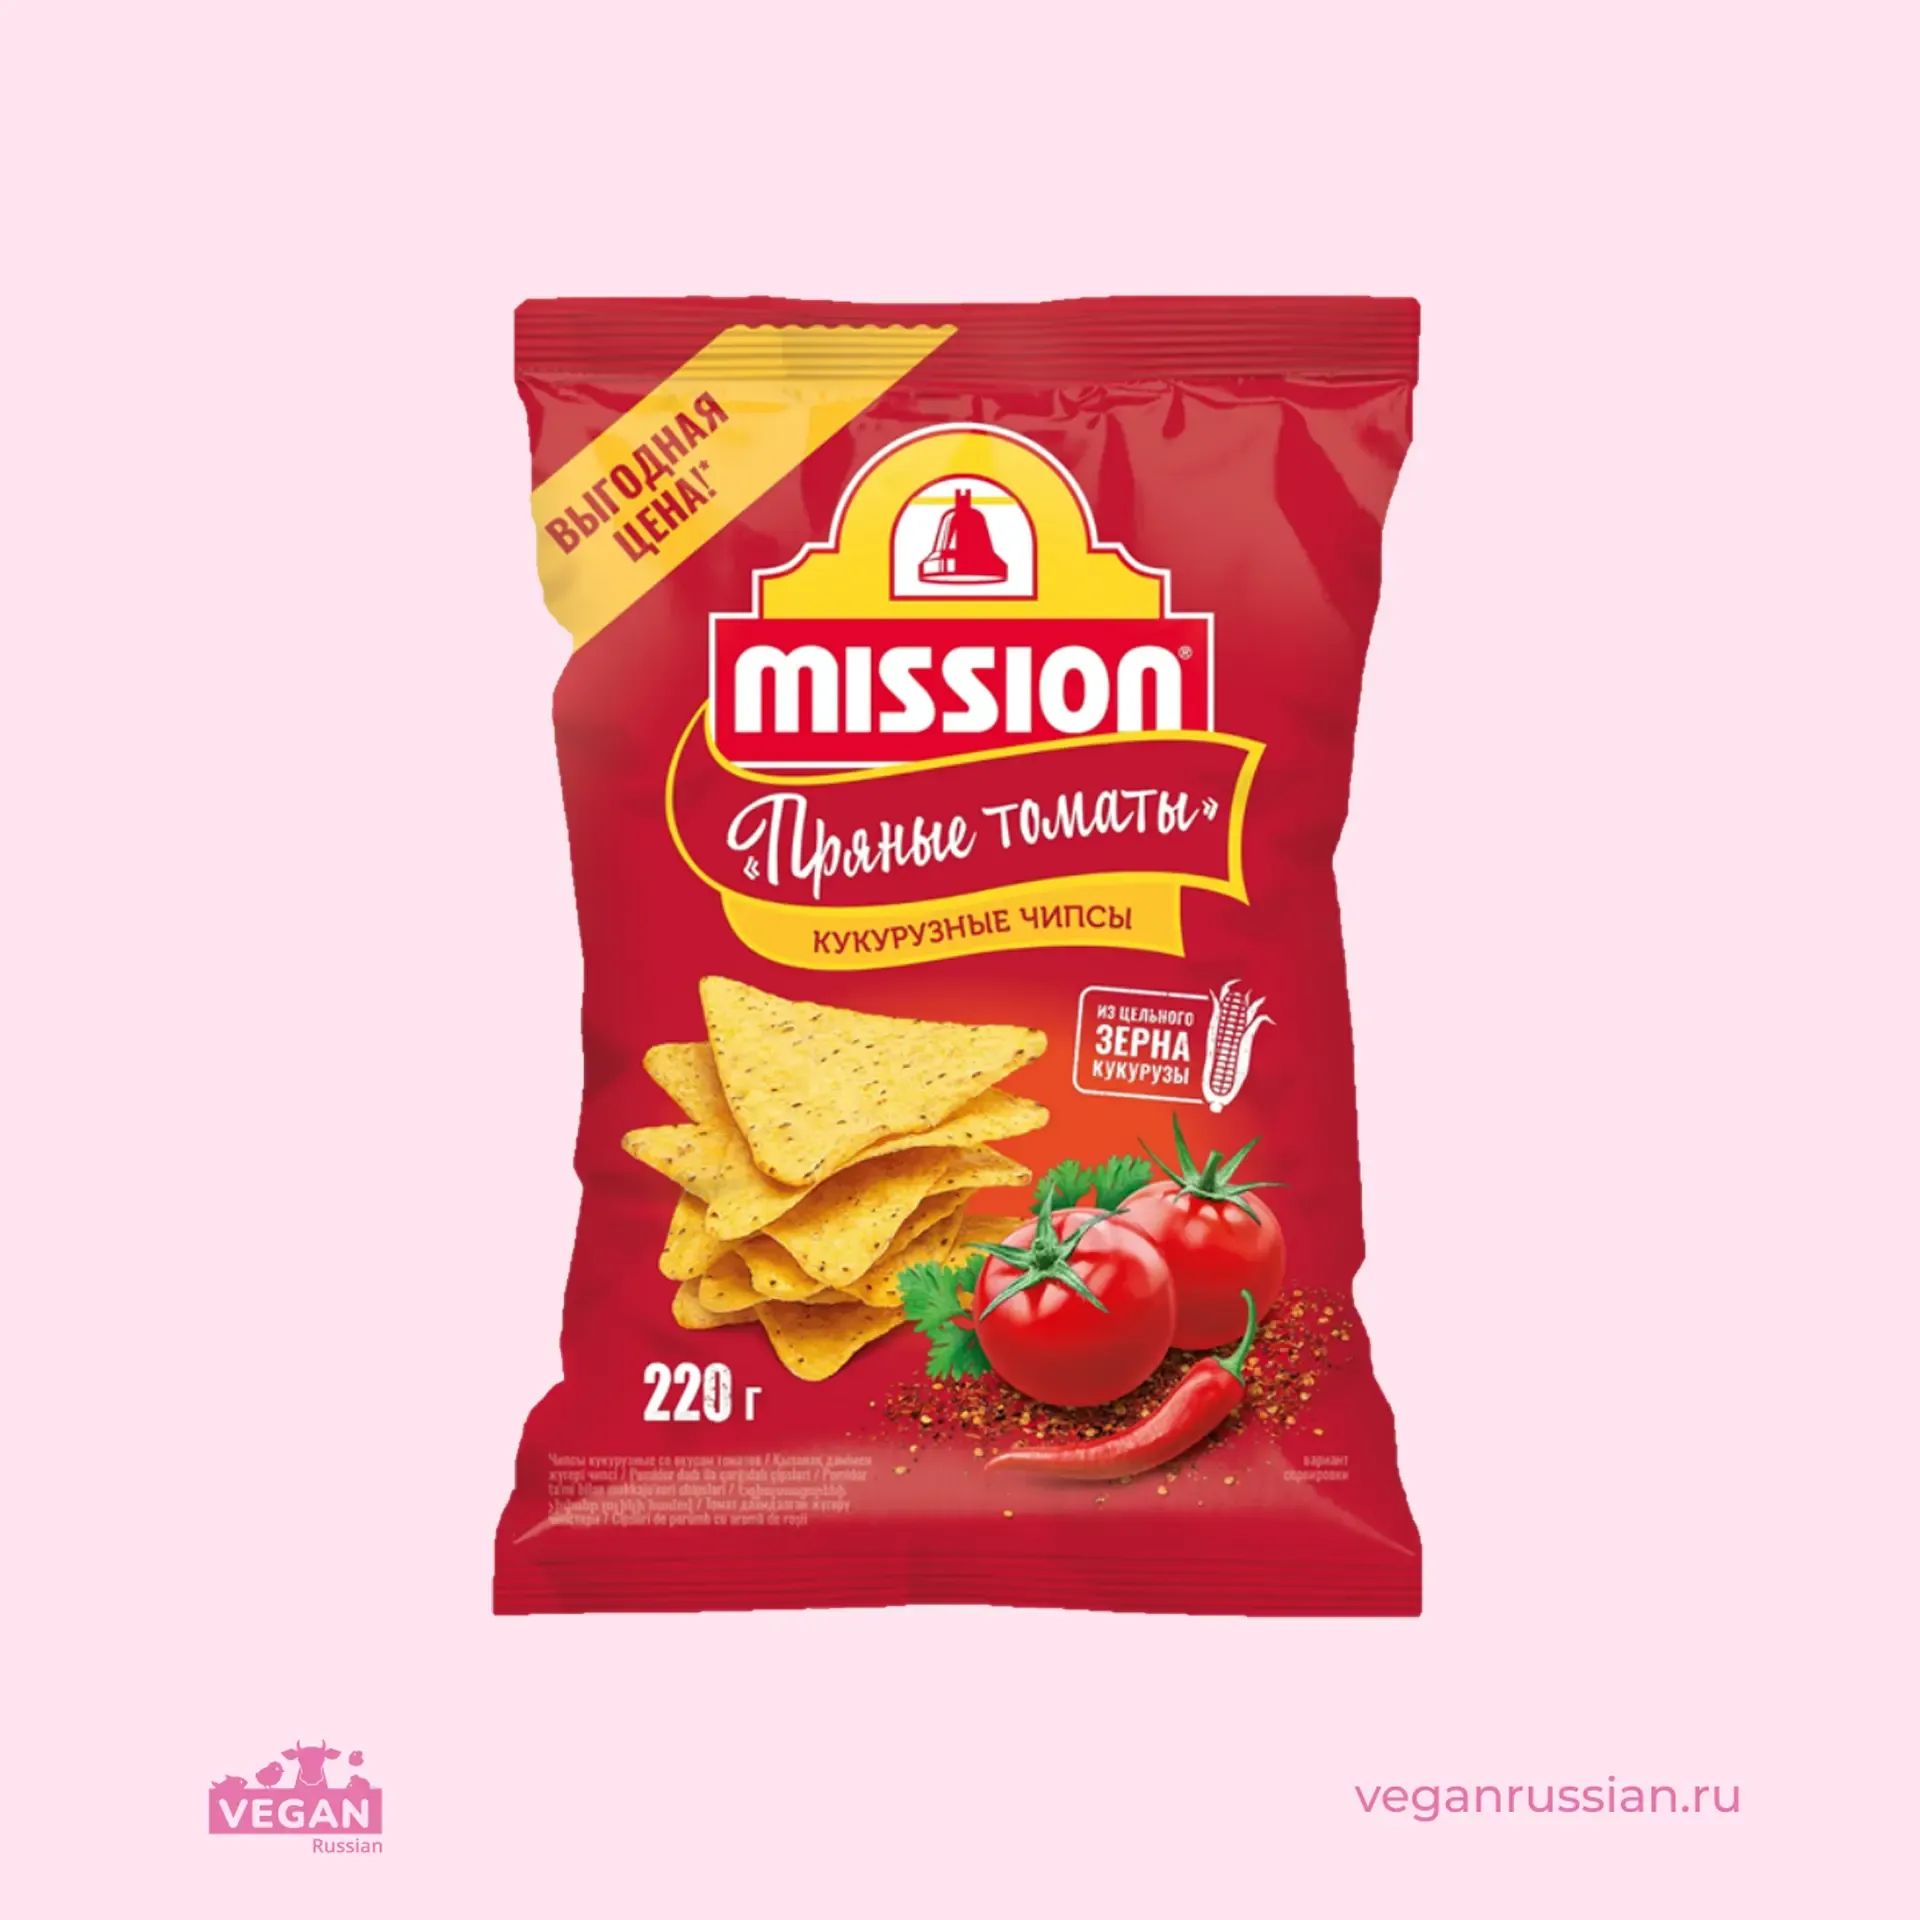 Кукурузные чипсы пряные томаты Mission 220 г